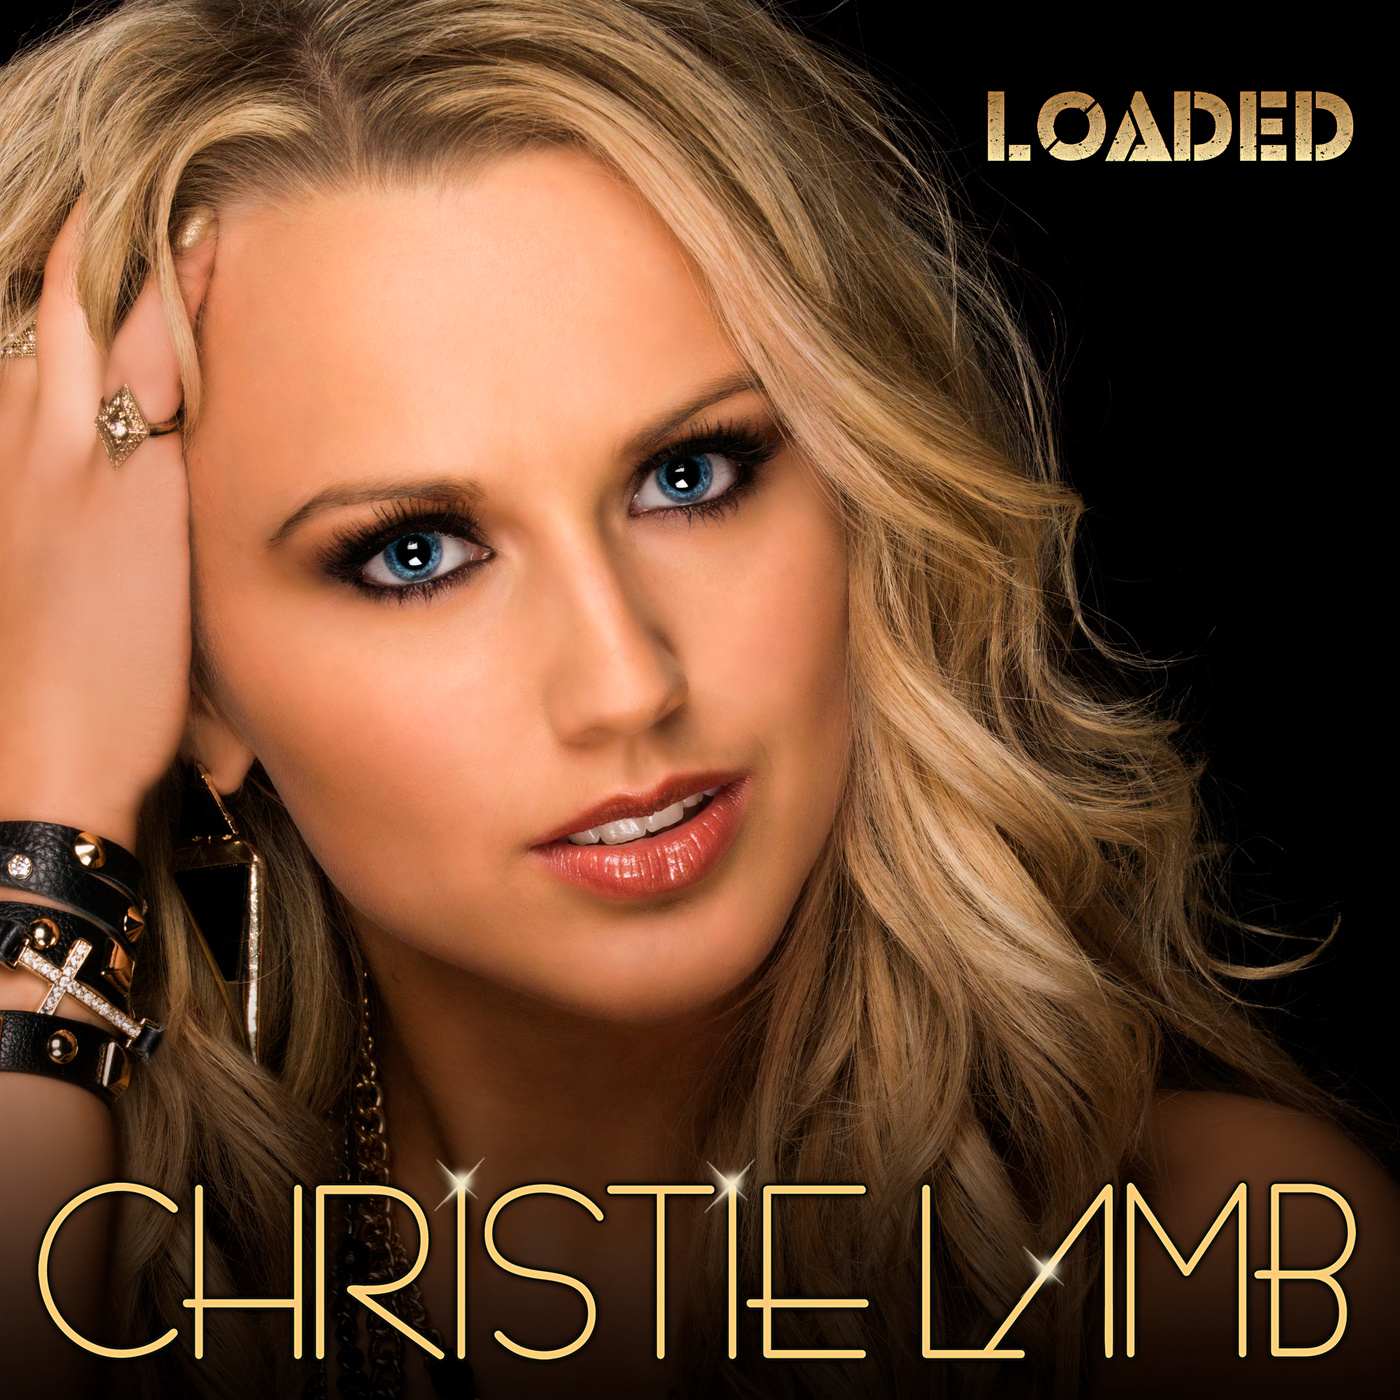 Christie Lamb - Loaded (album artwork cover)